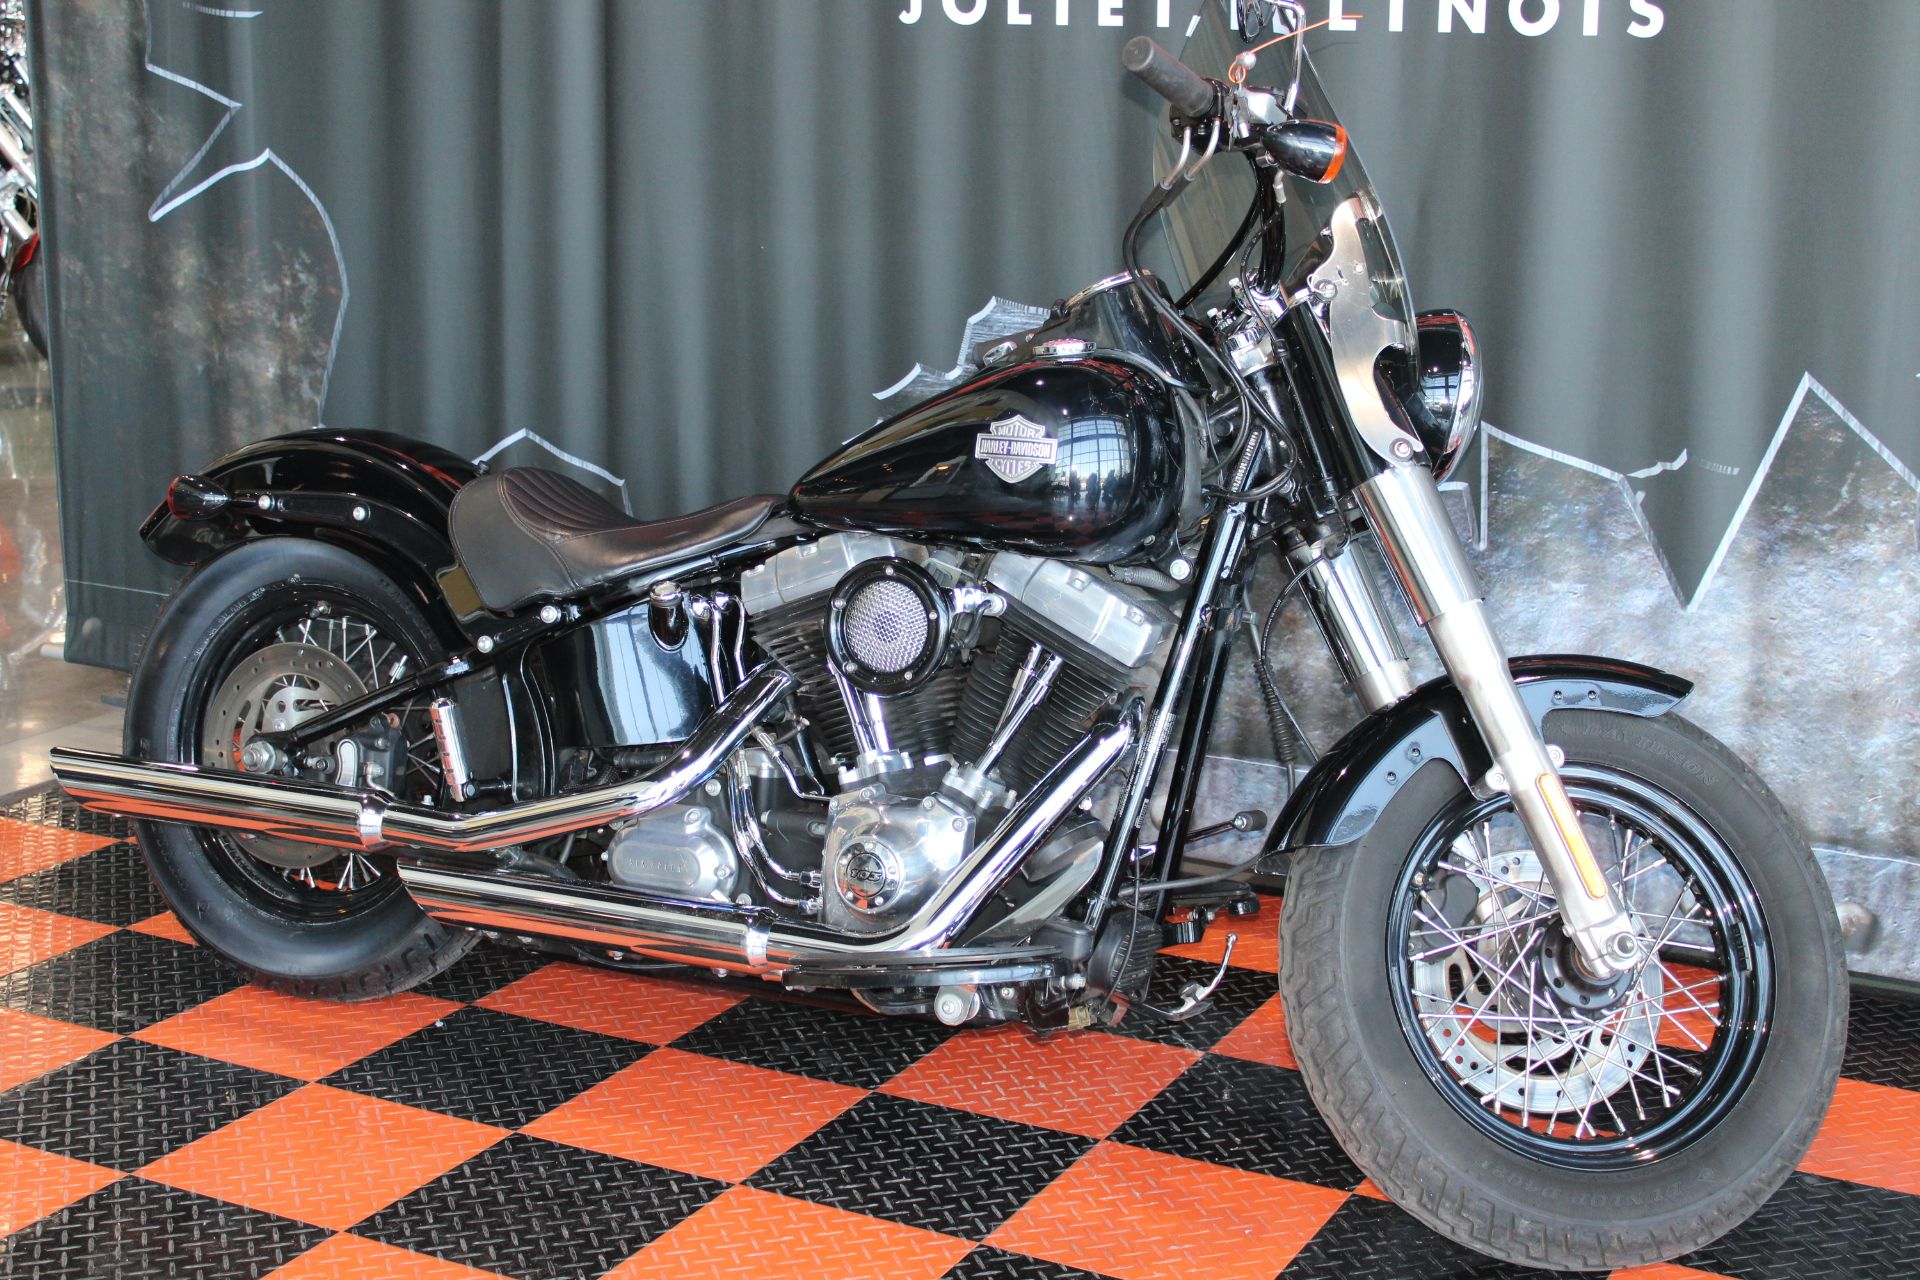 2013 Harley-Davidson Softail Slim® in Shorewood, Illinois - Photo 3